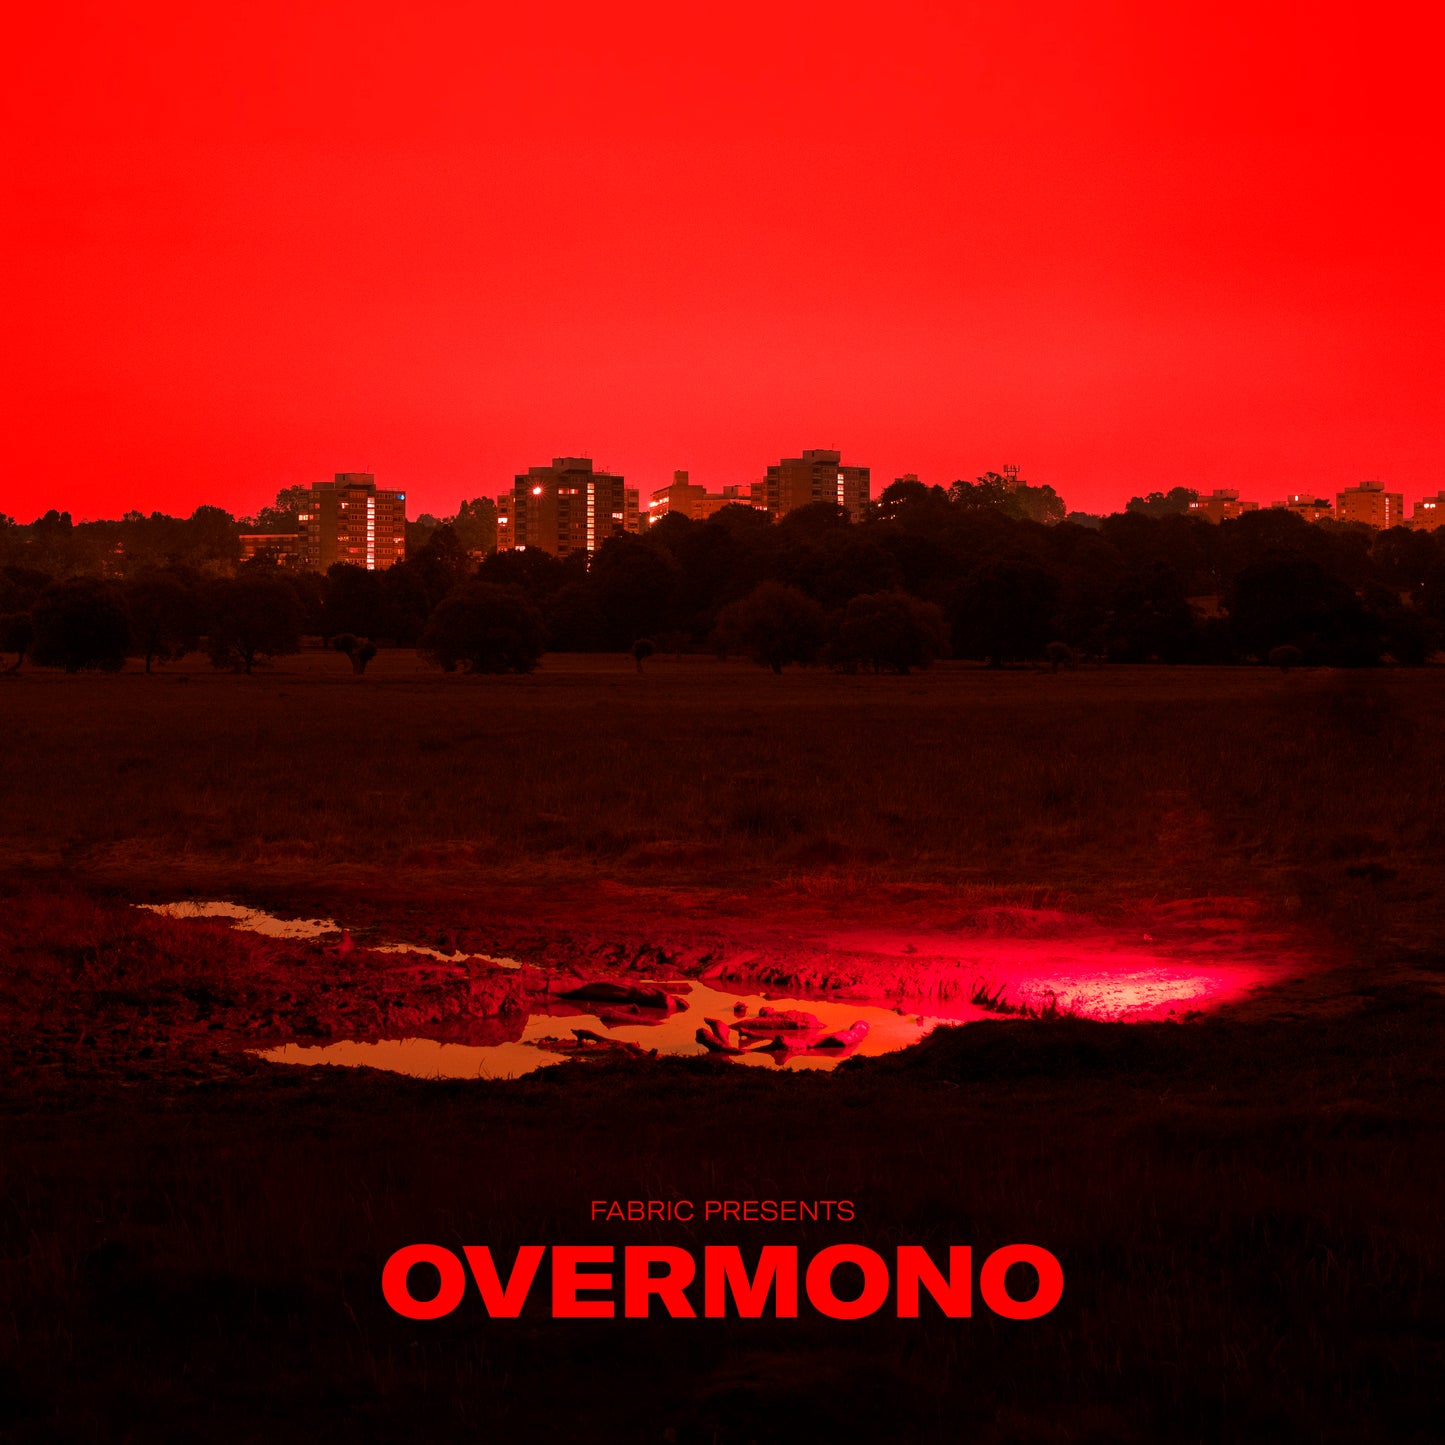 fabric presents Overmono LP WAVs & Mix